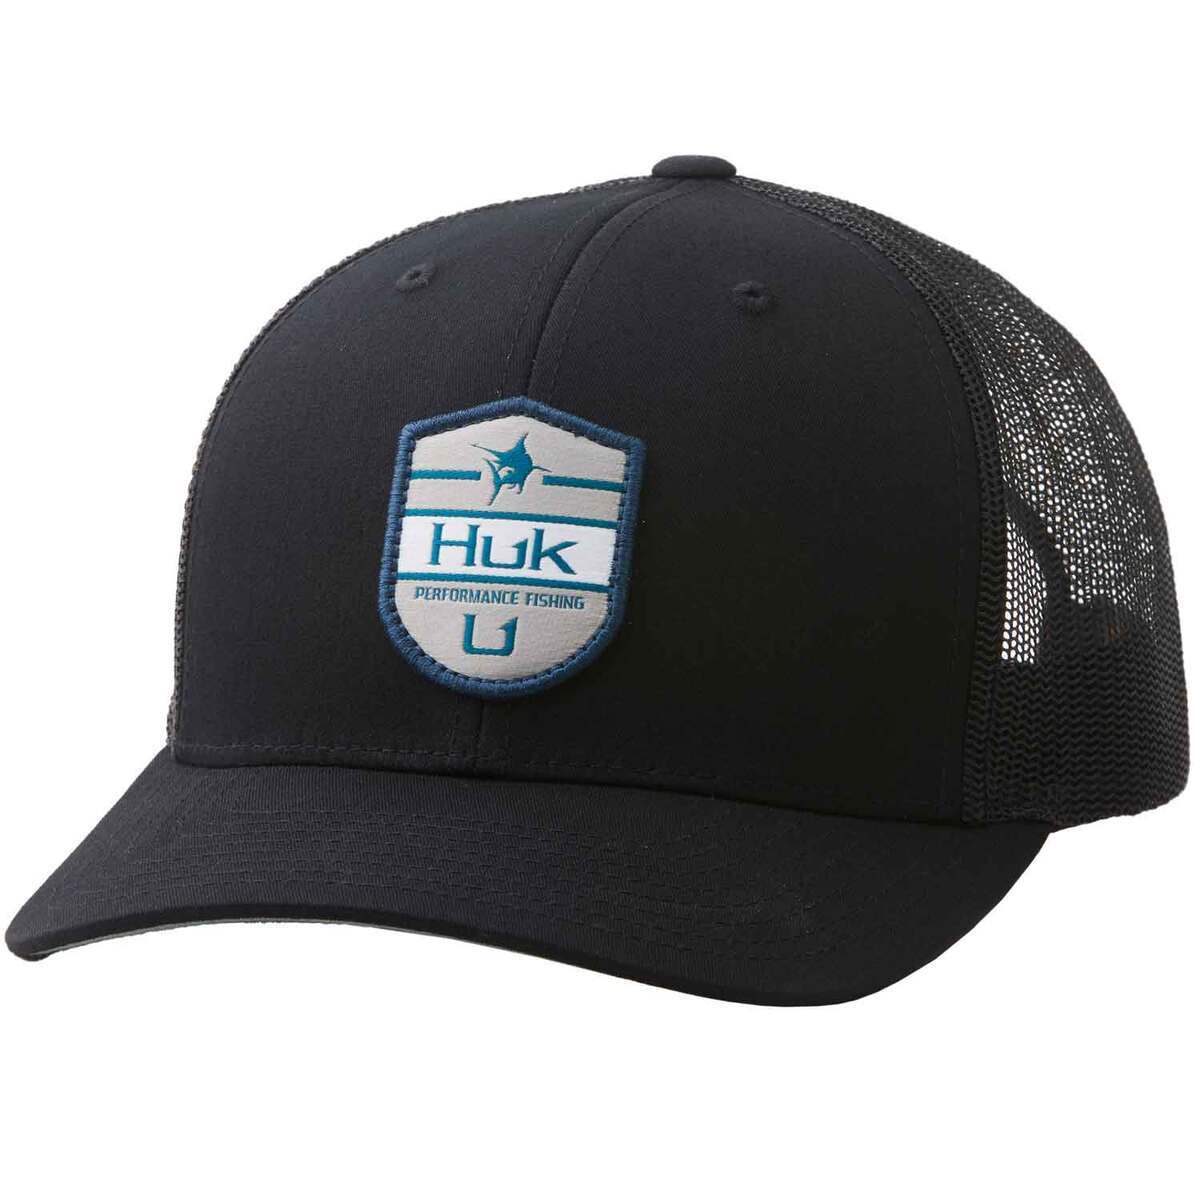 Huk Shield Logo Patch Trucker Hat - Black - Black One Size Fits Most ...